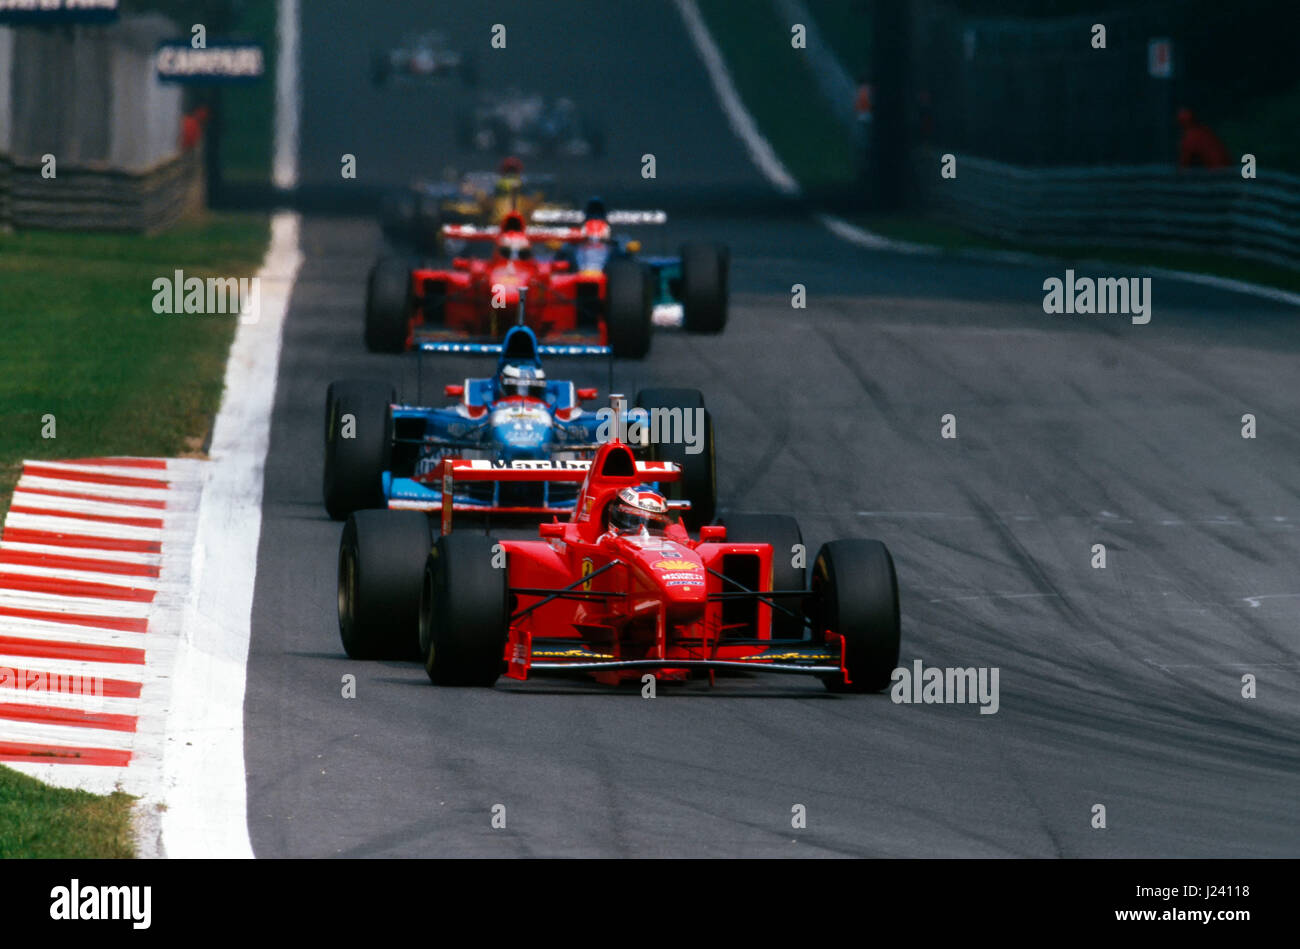 F1, Ferrari, Michael Schumacher, Gp Italy, Monza, 1997 Stock Photo